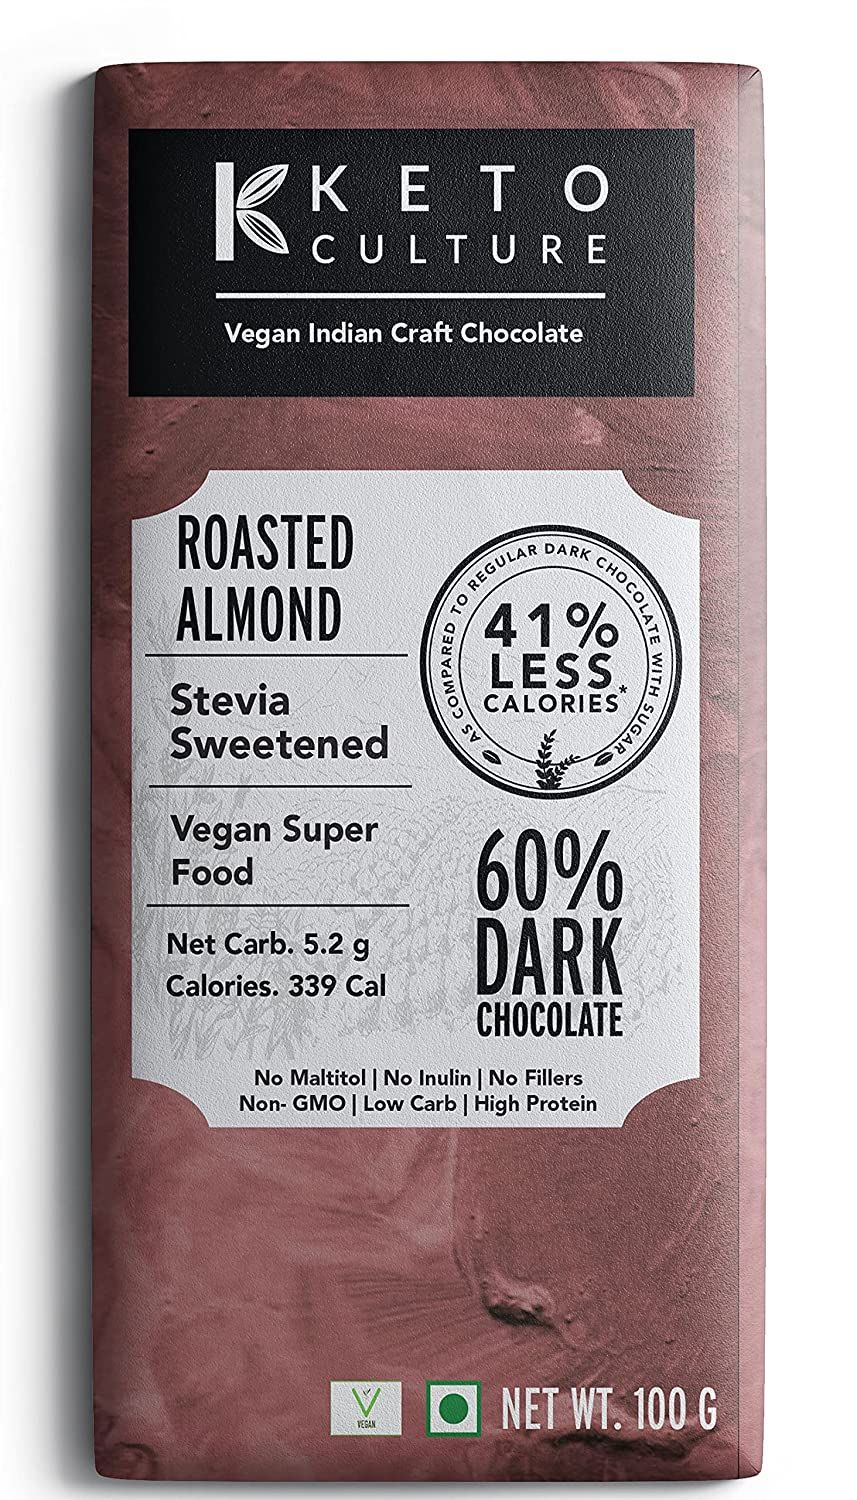 Keto Culture Roasted Almond Vegan Dark Chocolate Image